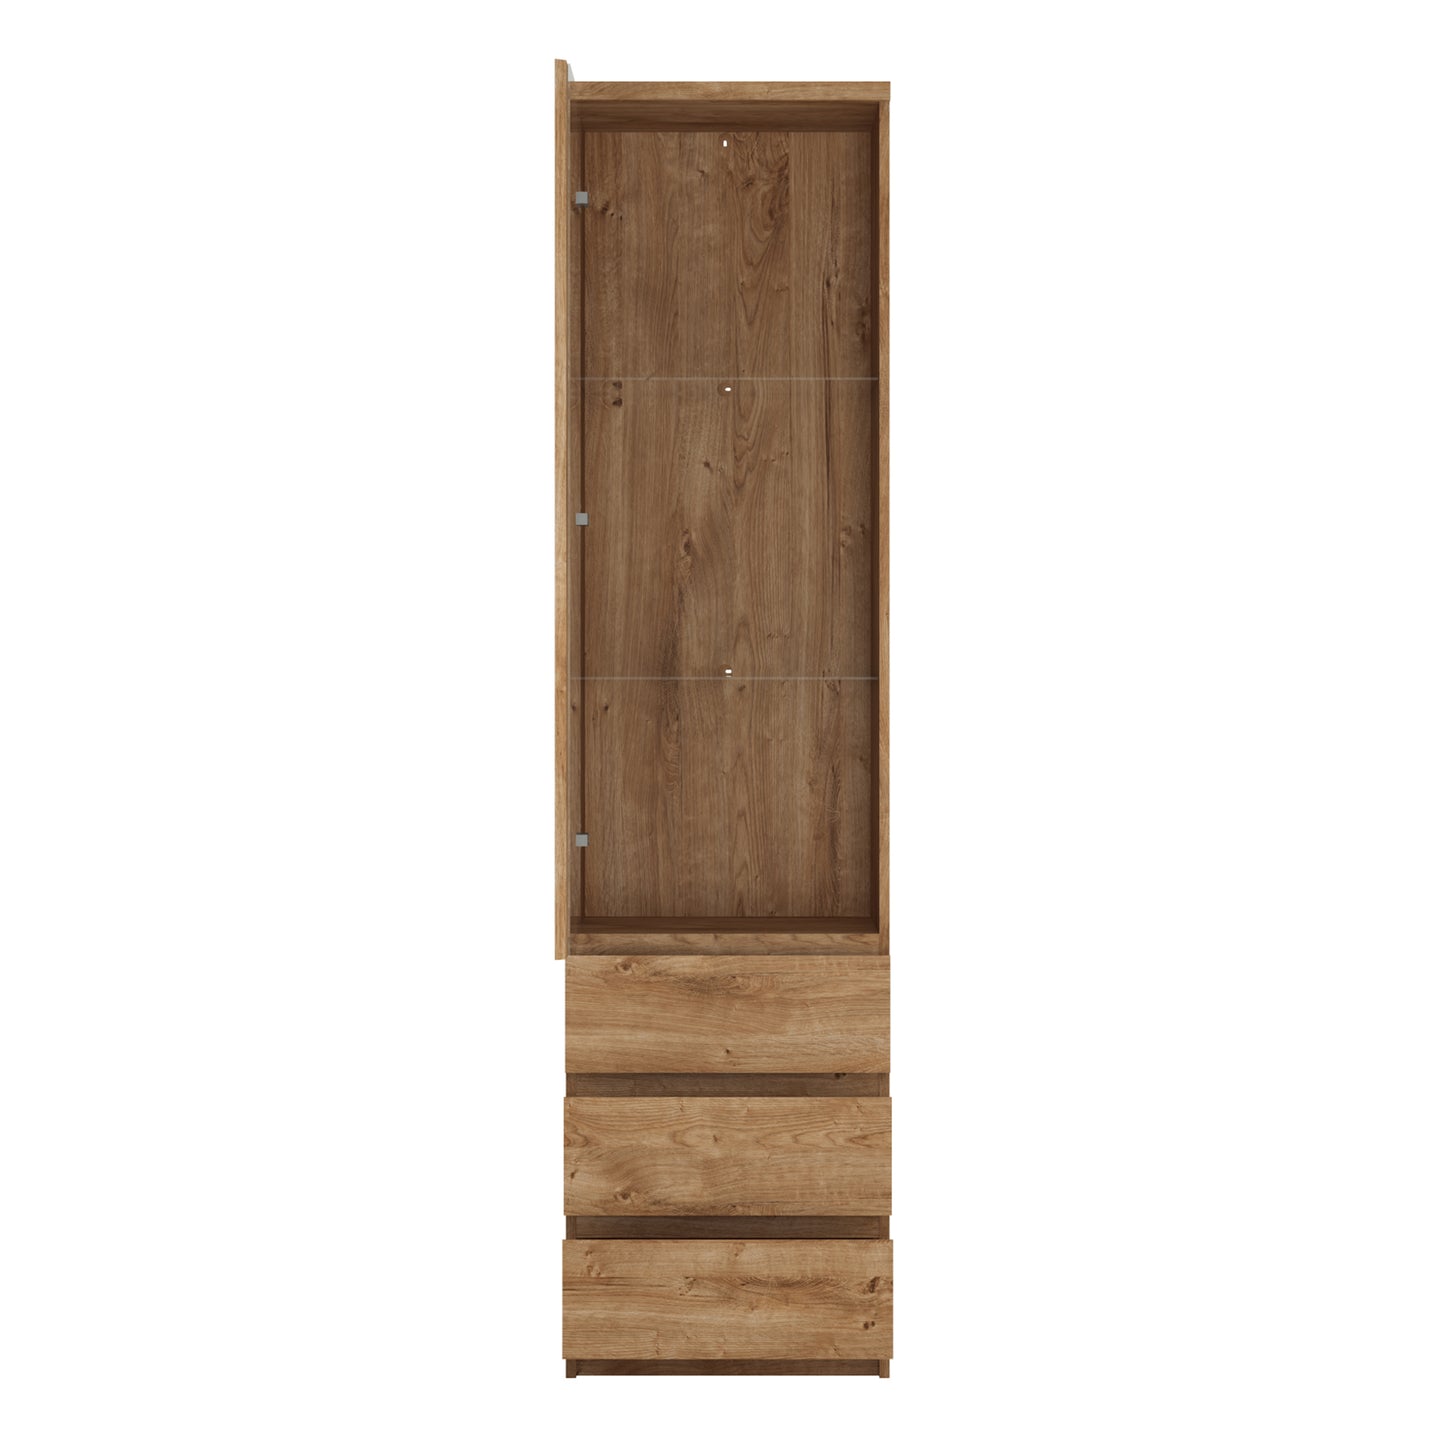 Fribo Oak Fribo Tall narrow 1 door 3 drawer glazed display cabinet in Oak